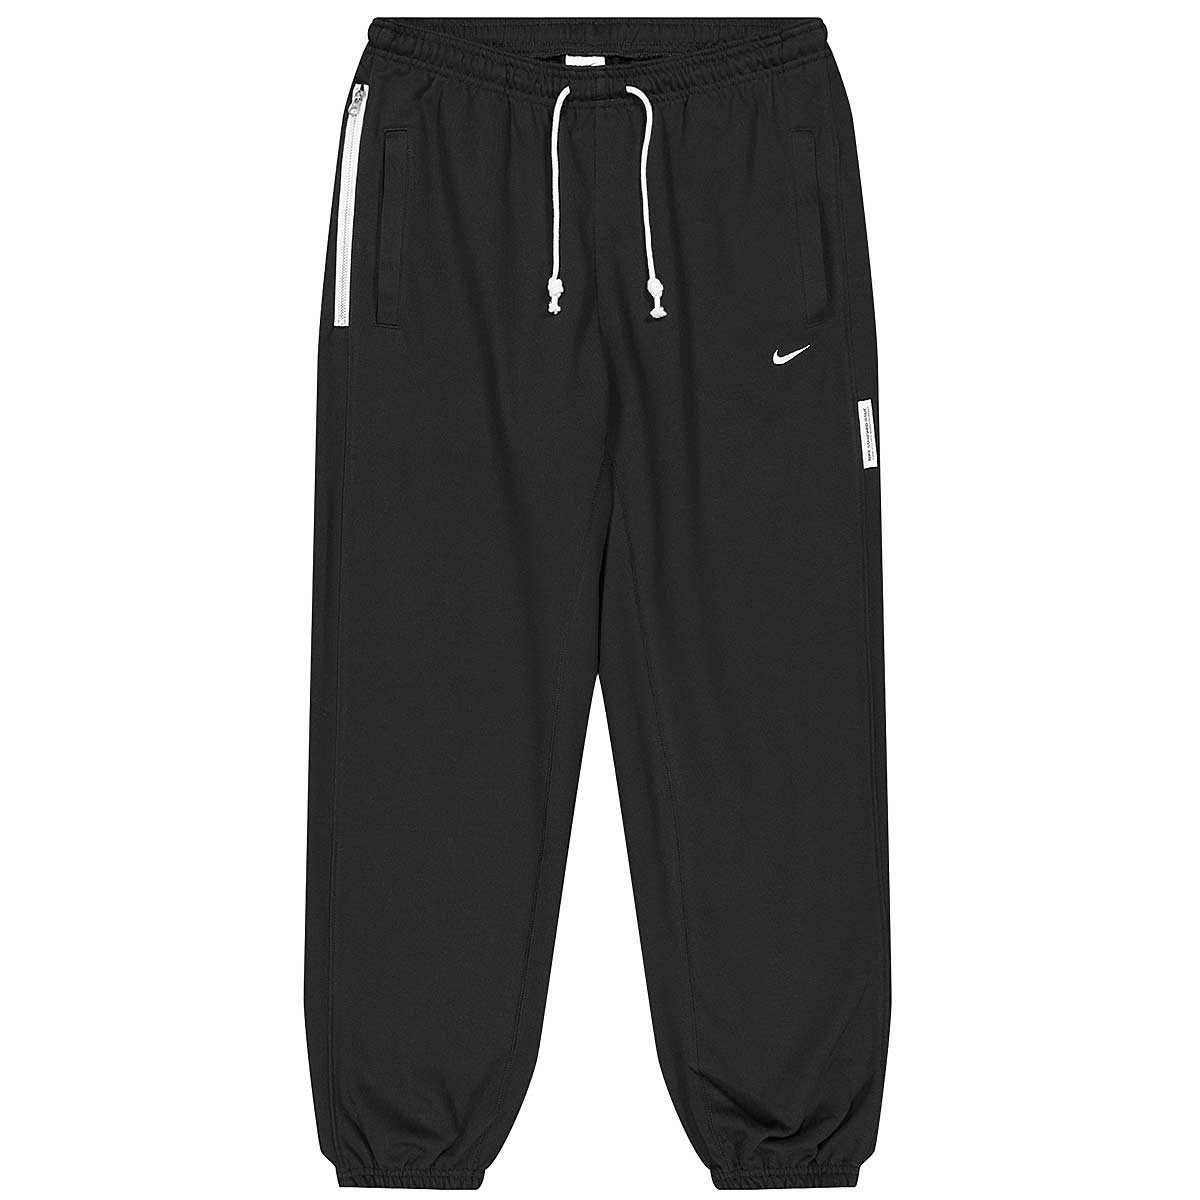 Nike Dri-Fit Standard Issue Pant, Black/Pale Ivory